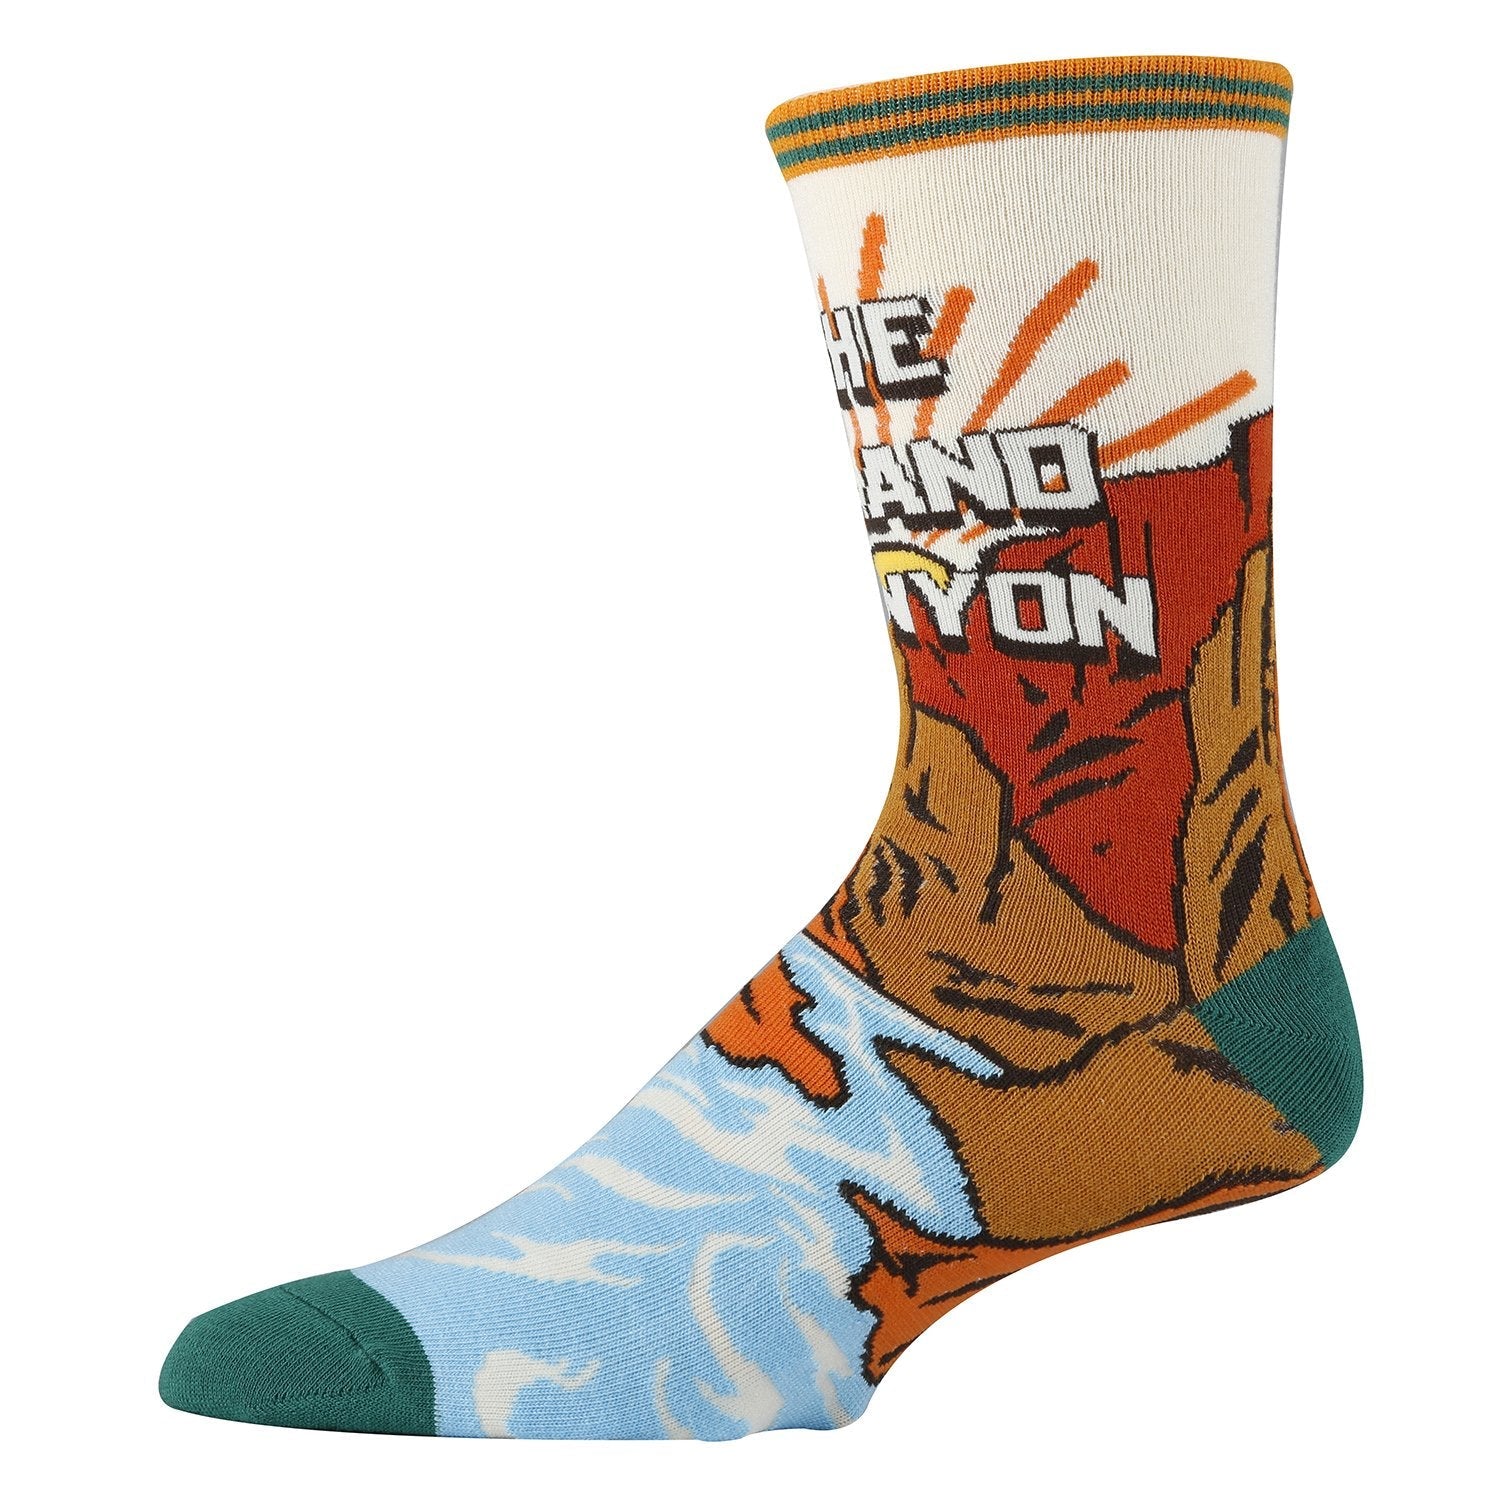 grand-canyon-mens-crew-socks-3-oooh-yeah-socks